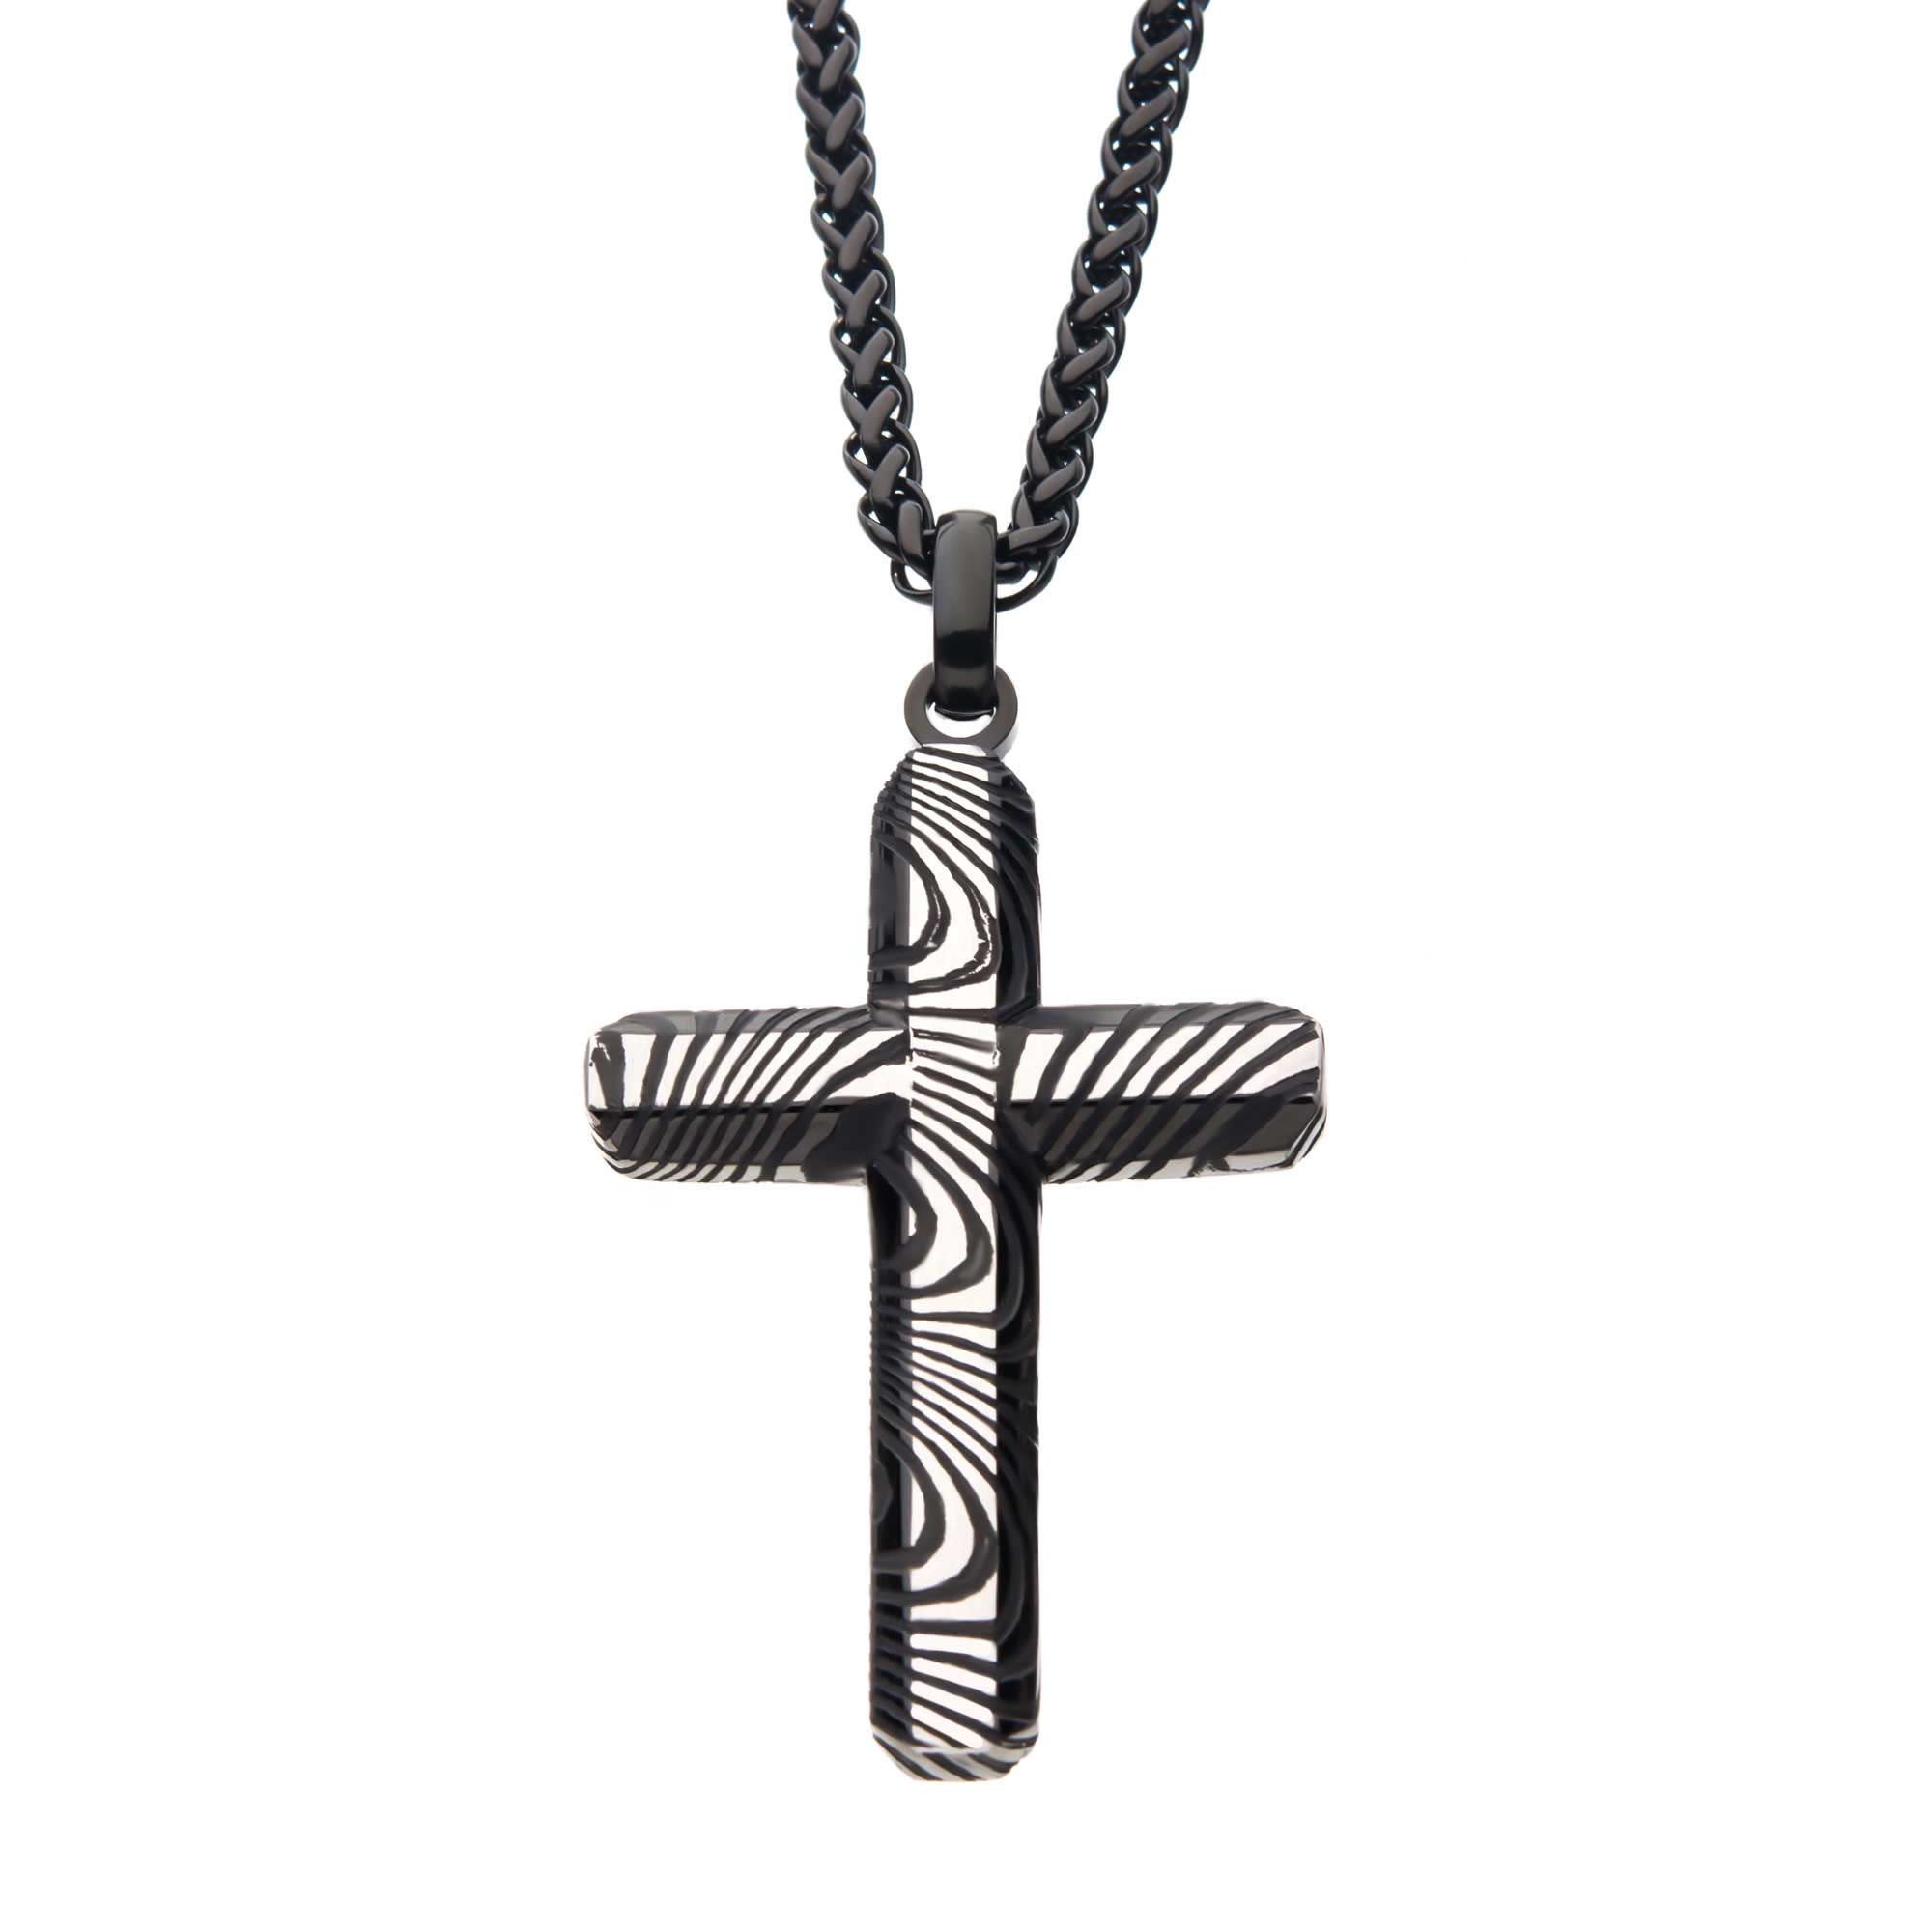 Damascus Cross Necklace 24"